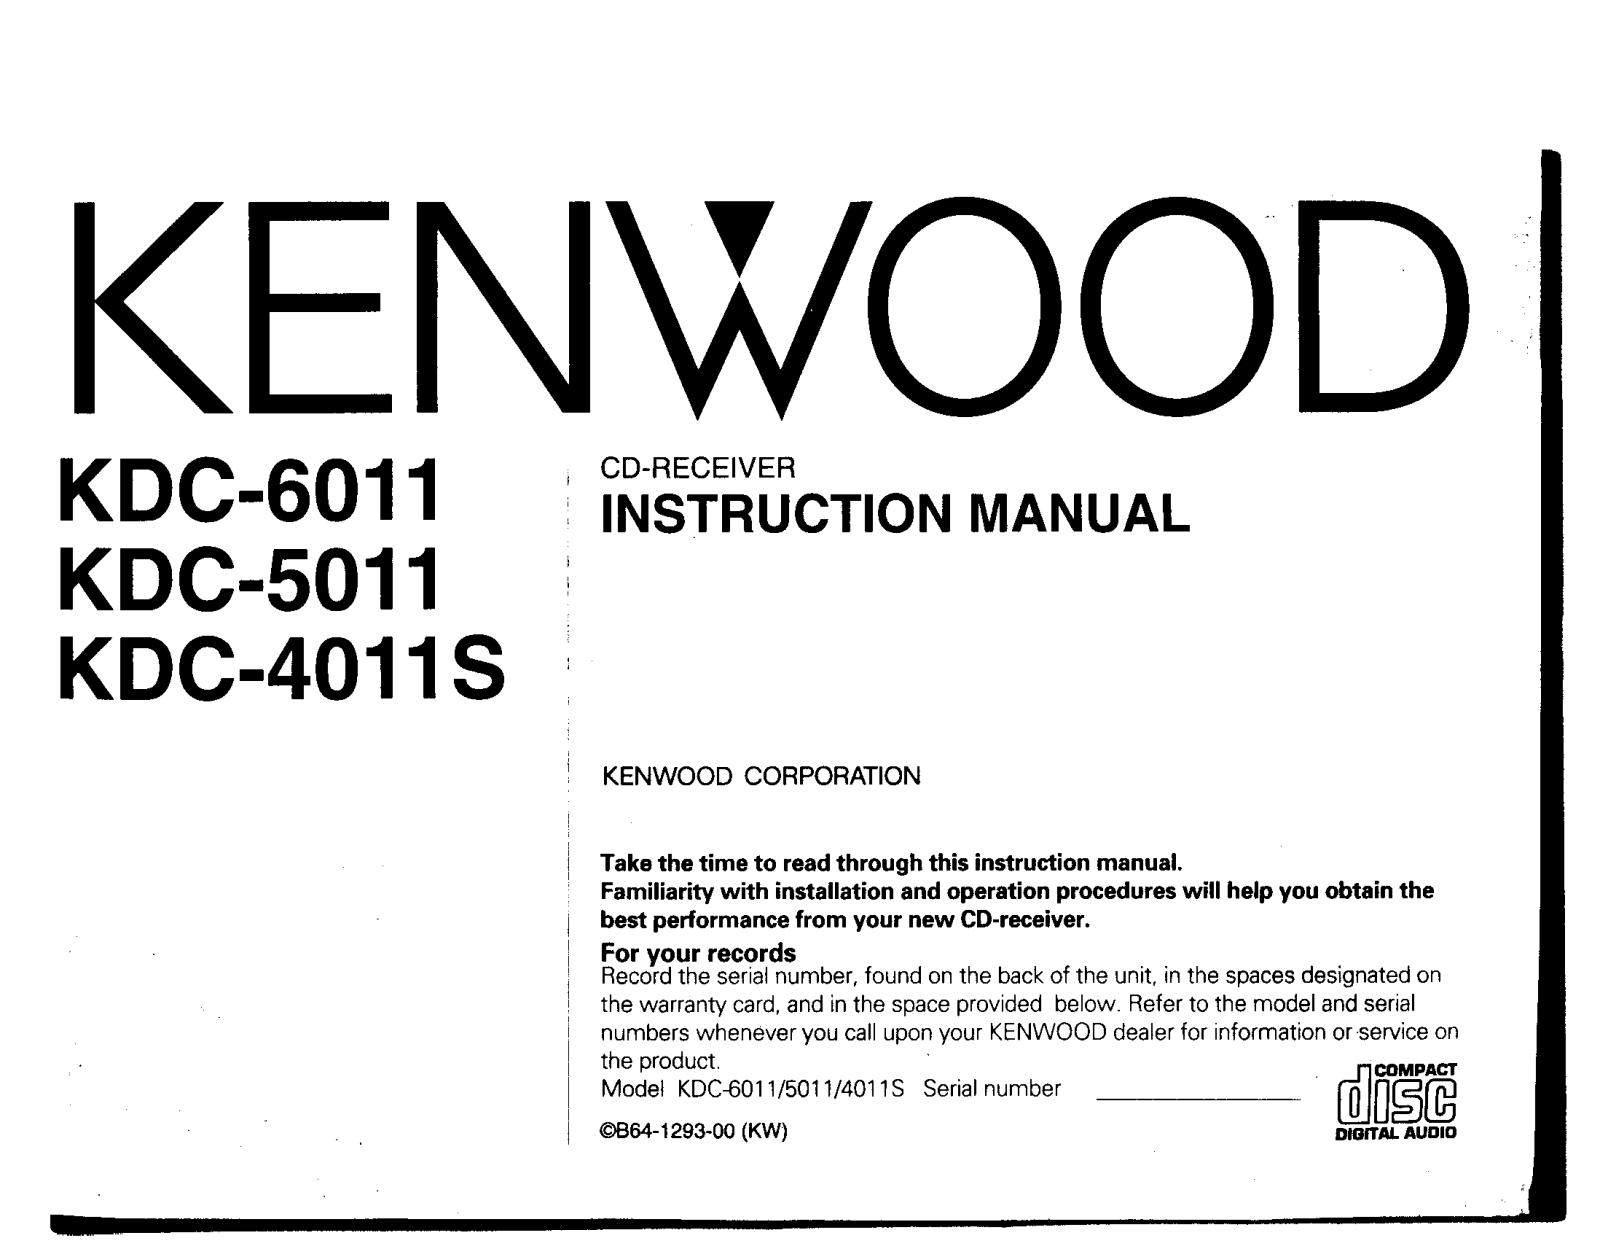 Kenwood KDC-6011, KDC-5011, KDC-4011S Owner's Manual